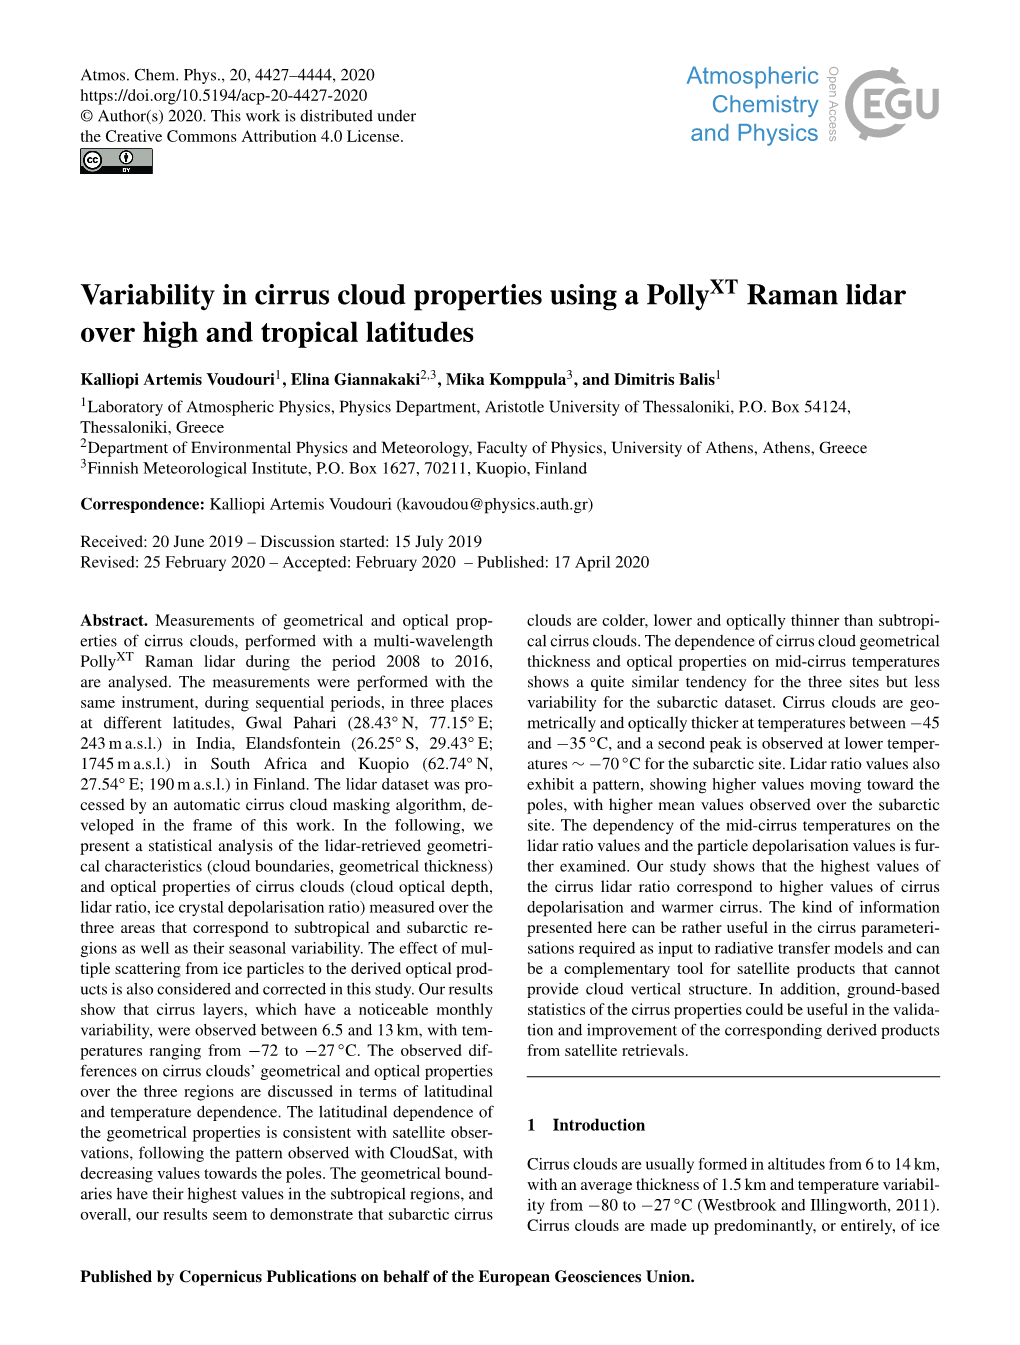 Variability in Cirrus Cloud Properties Using a Pollyxt Raman Lidar Over High and Tropical Latitudes